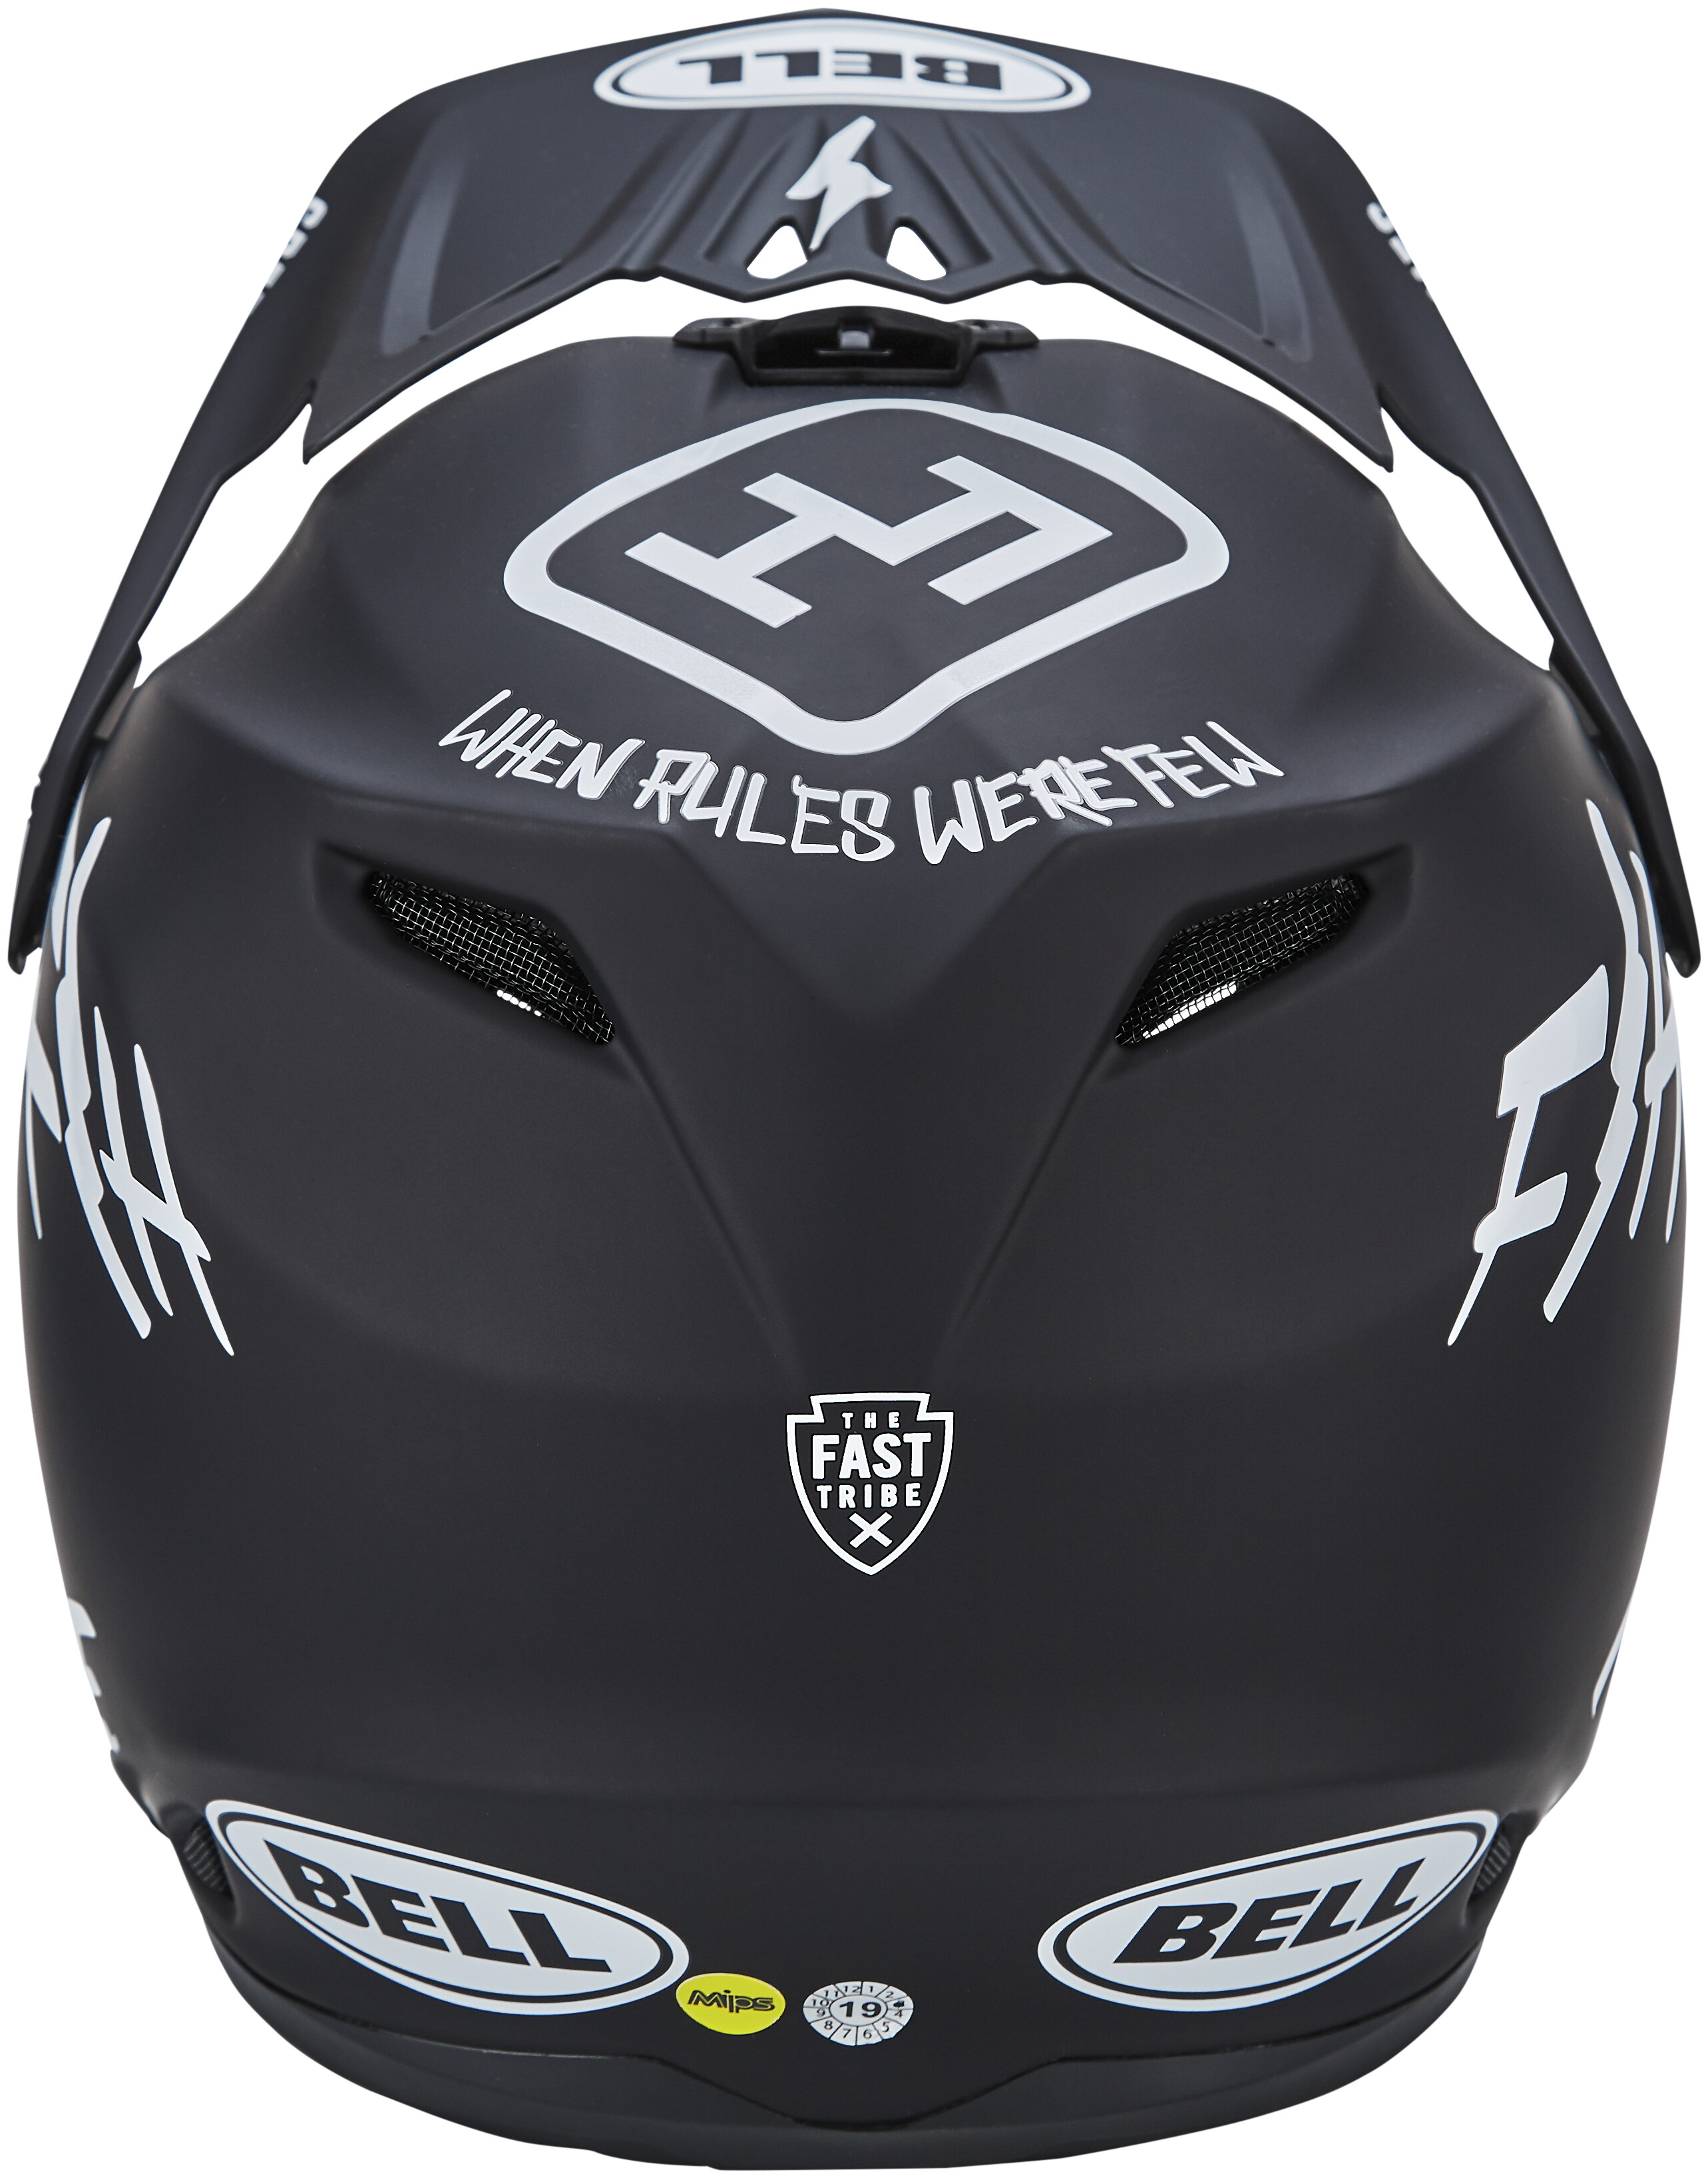 Bell Full-9 Fusion MIPS Helmet | バイク・自転車通販のProbikeshop